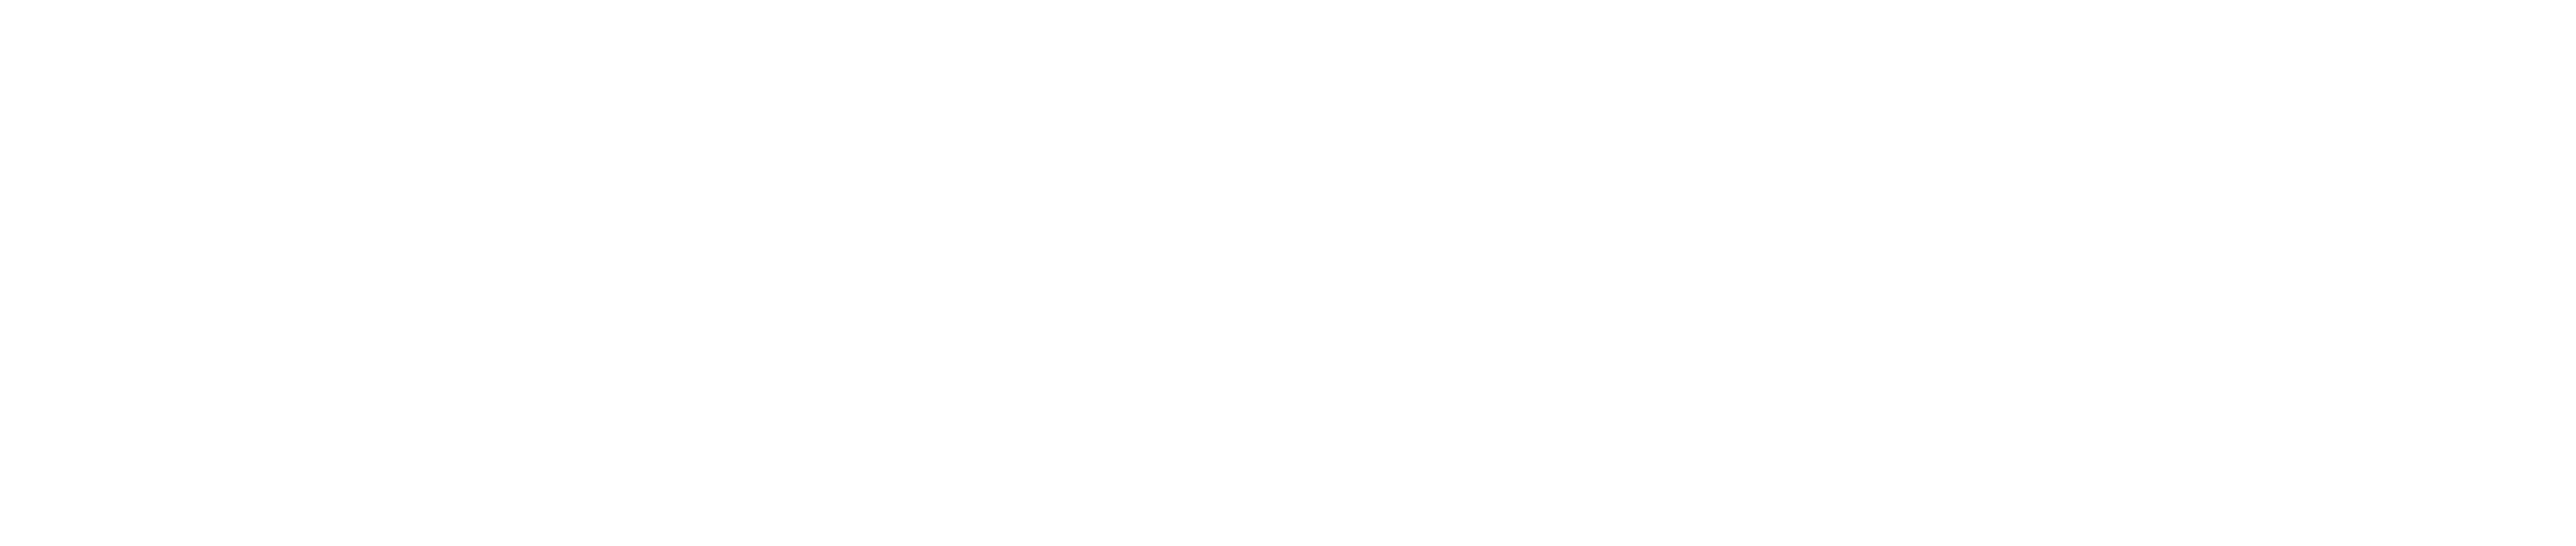 Play Infinity Dragon games on Starcasino.be